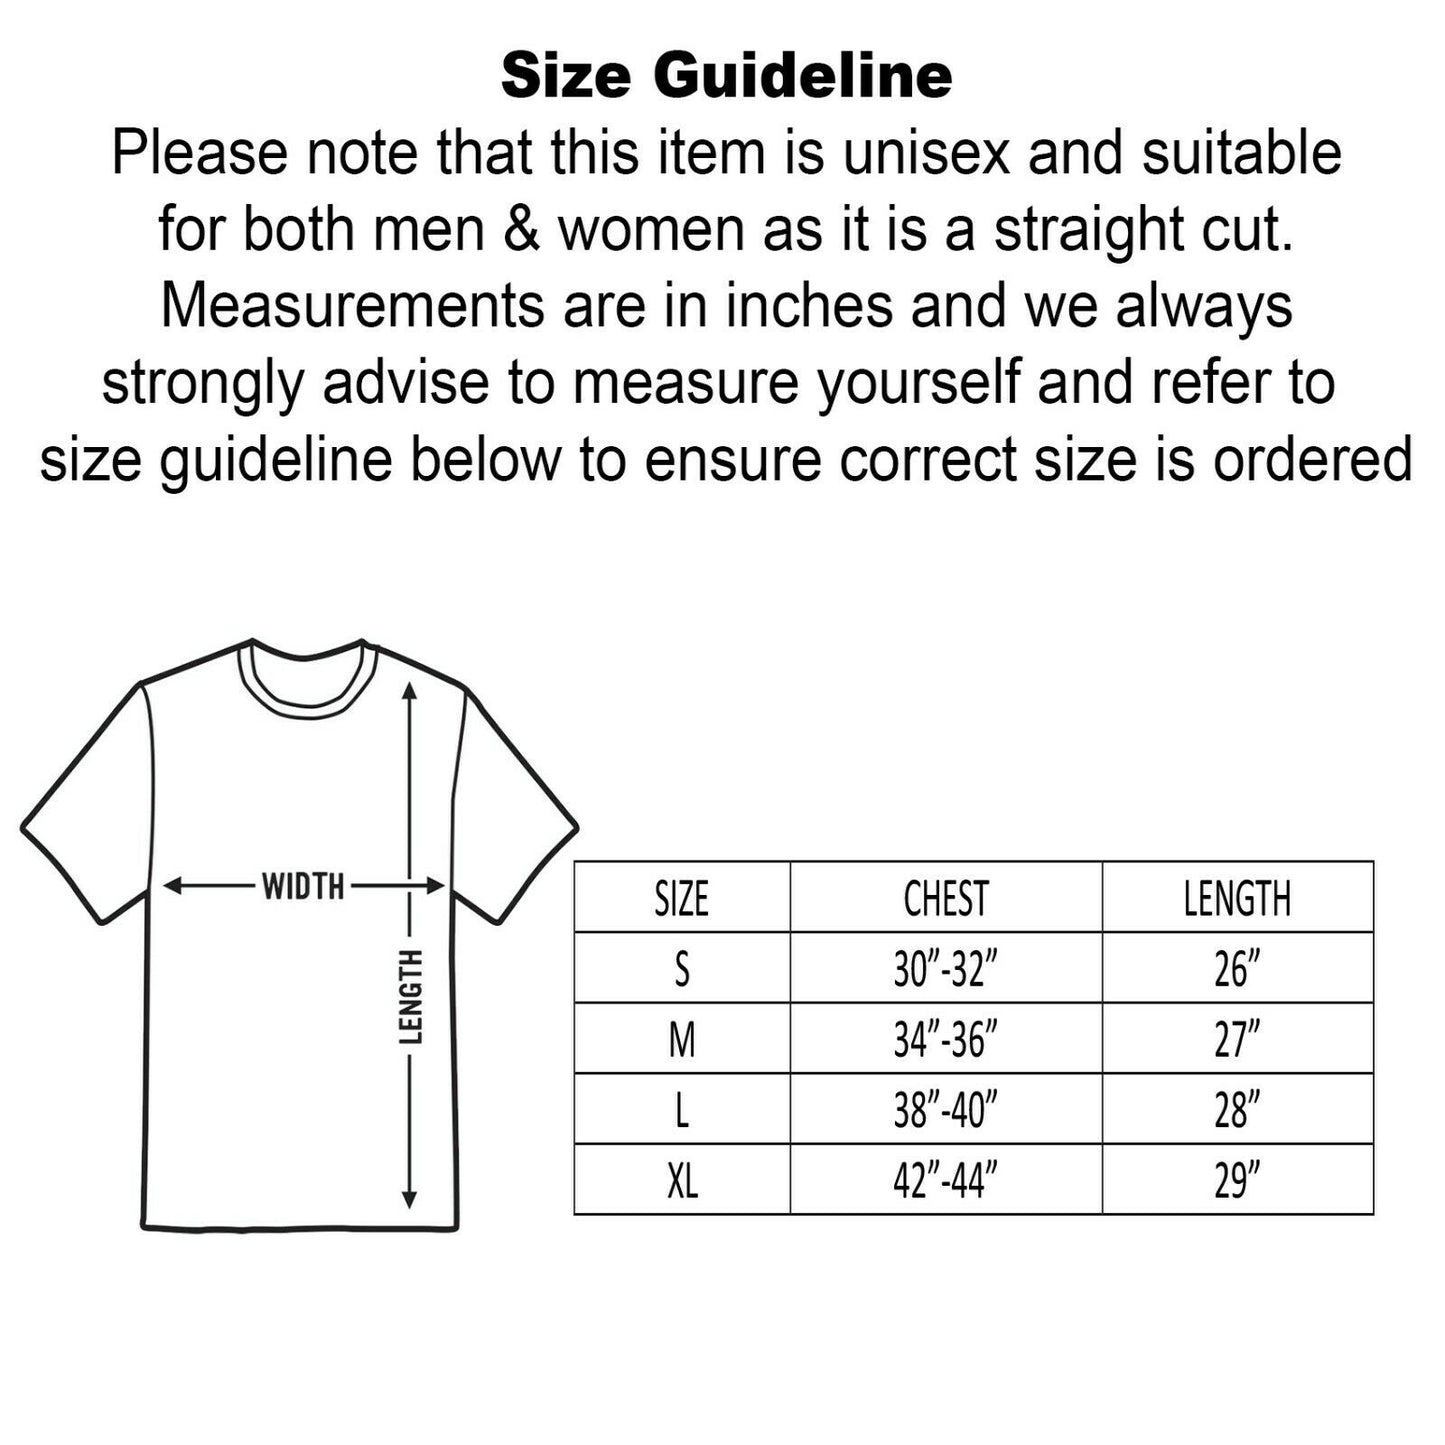 Unisex Siouxsie And The Banshees Raglan 3/4 Sleeve Baseball T-Shirt